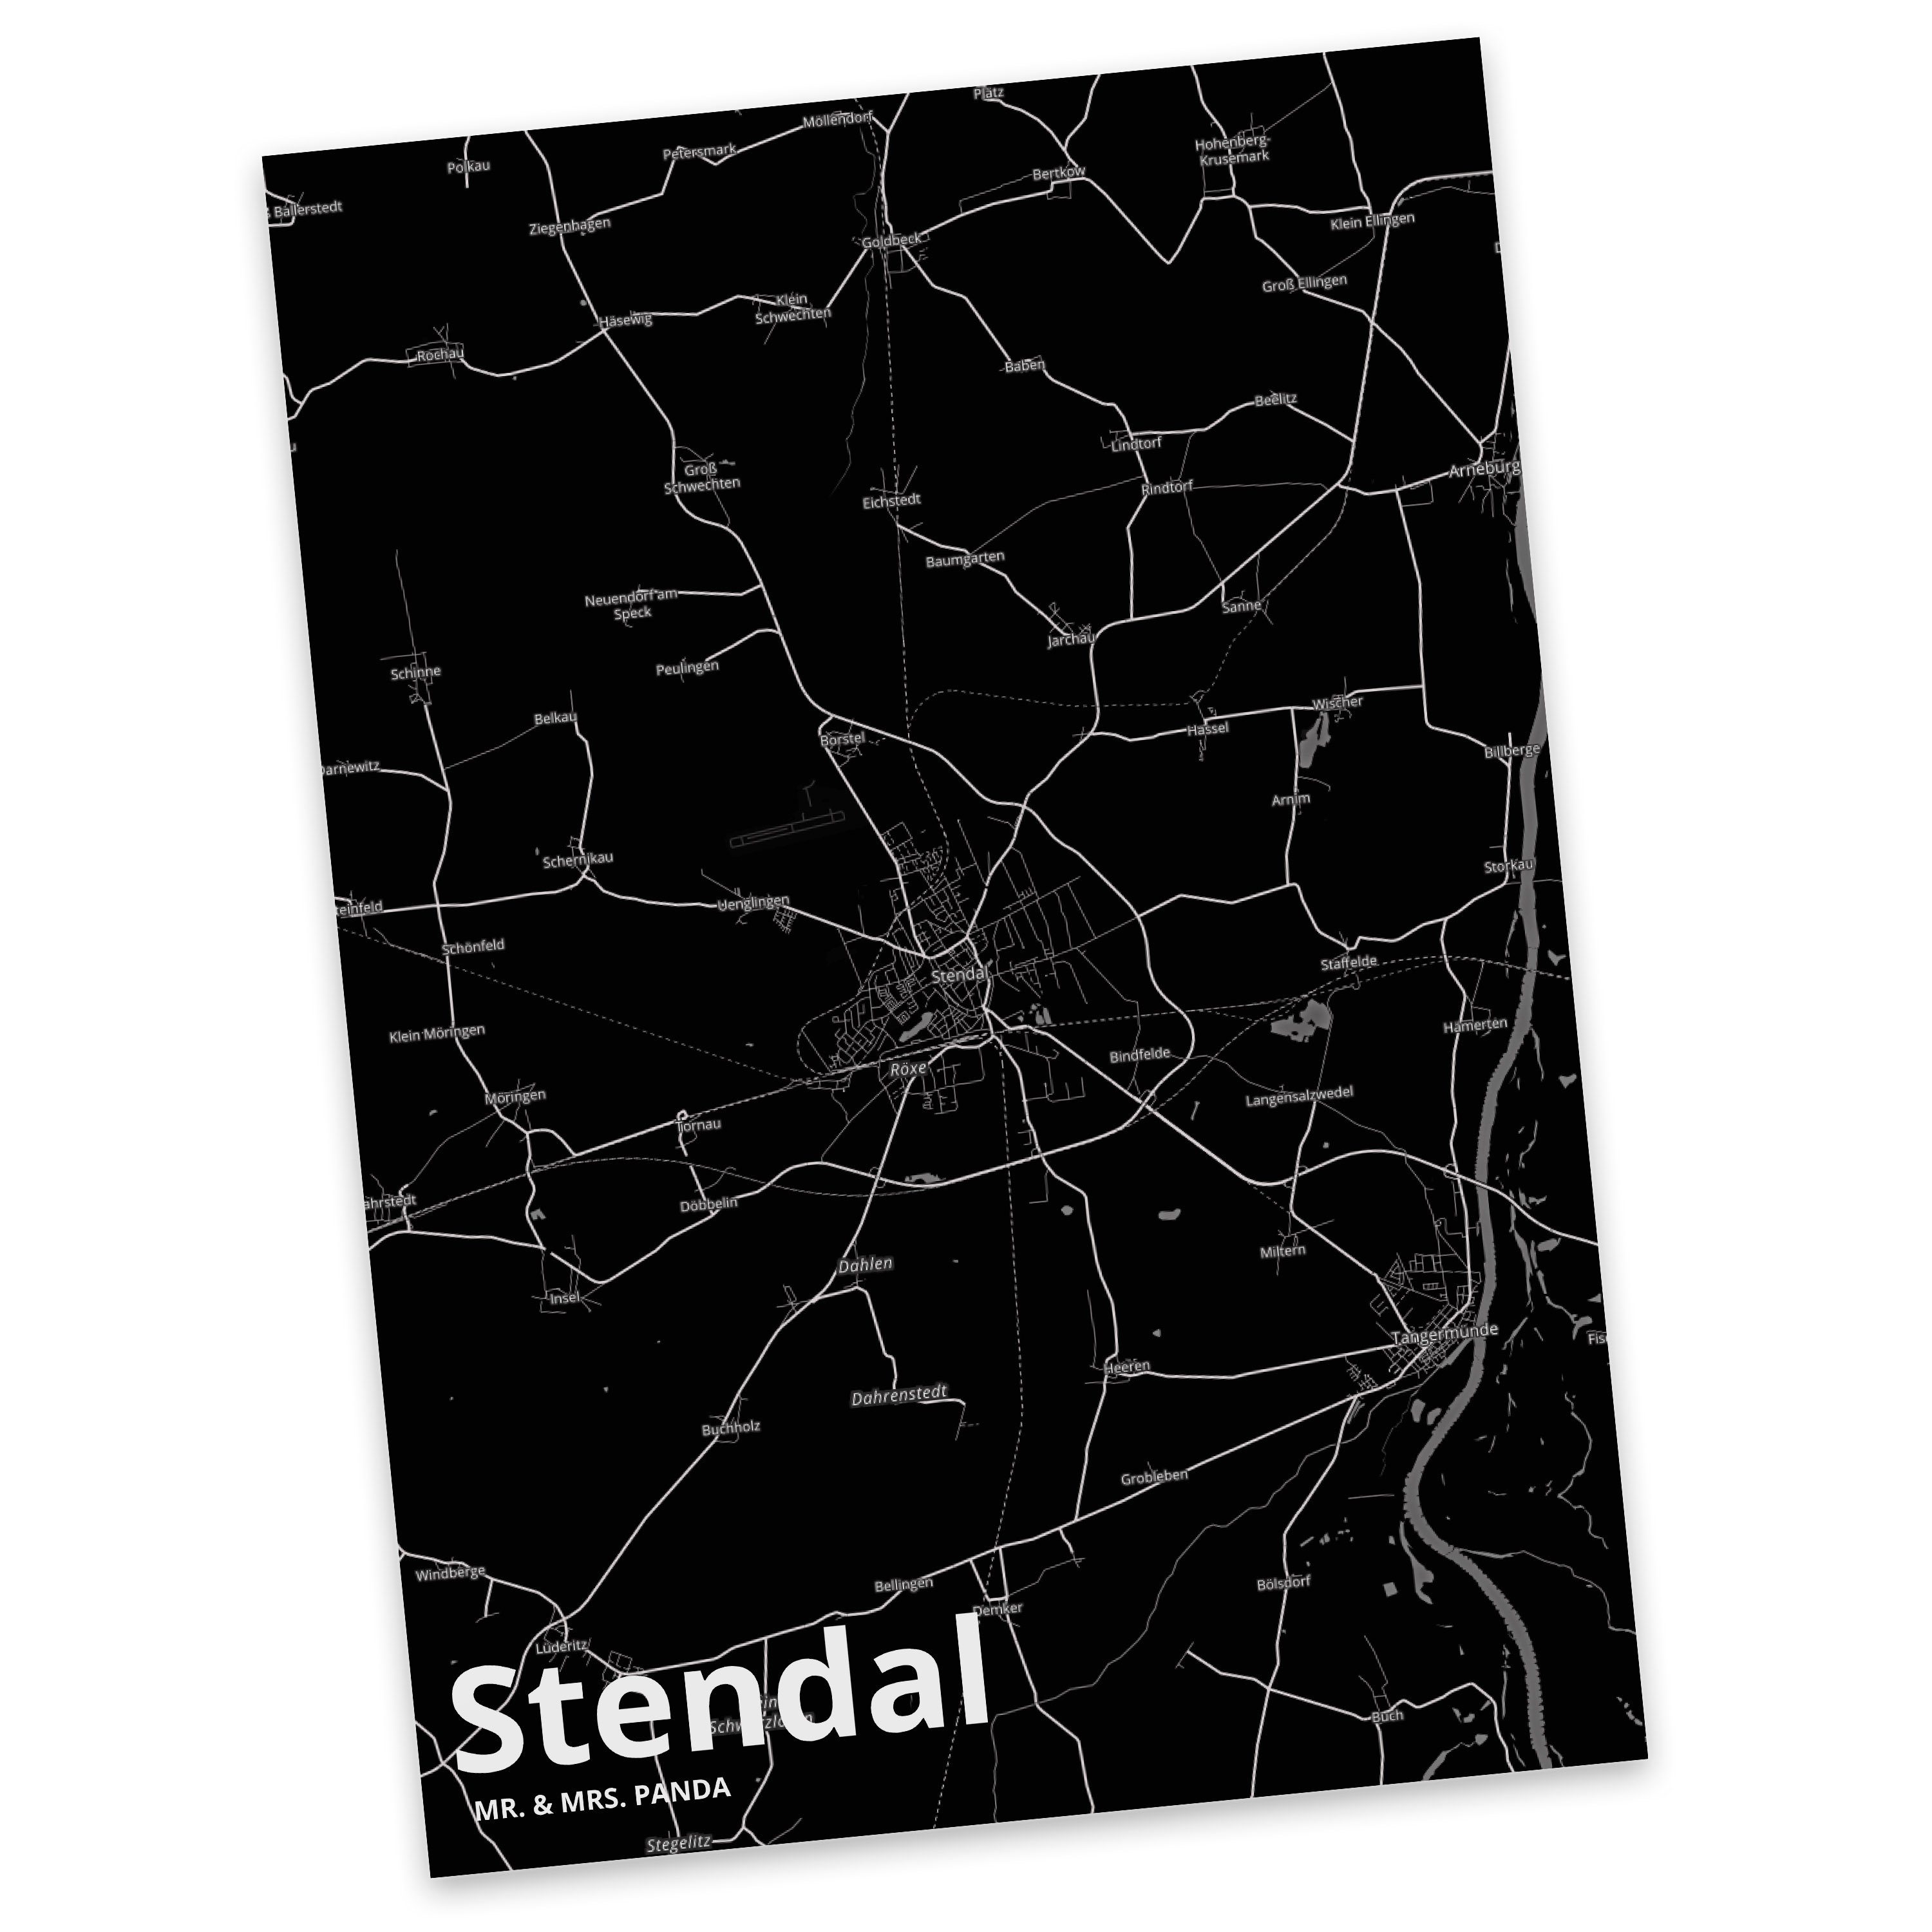 Mr. & Mrs. Panda Postkarte Stendal - Geschenk, Städte, Stadt, Dorf, Dankeskarte, Karte, Grußkart